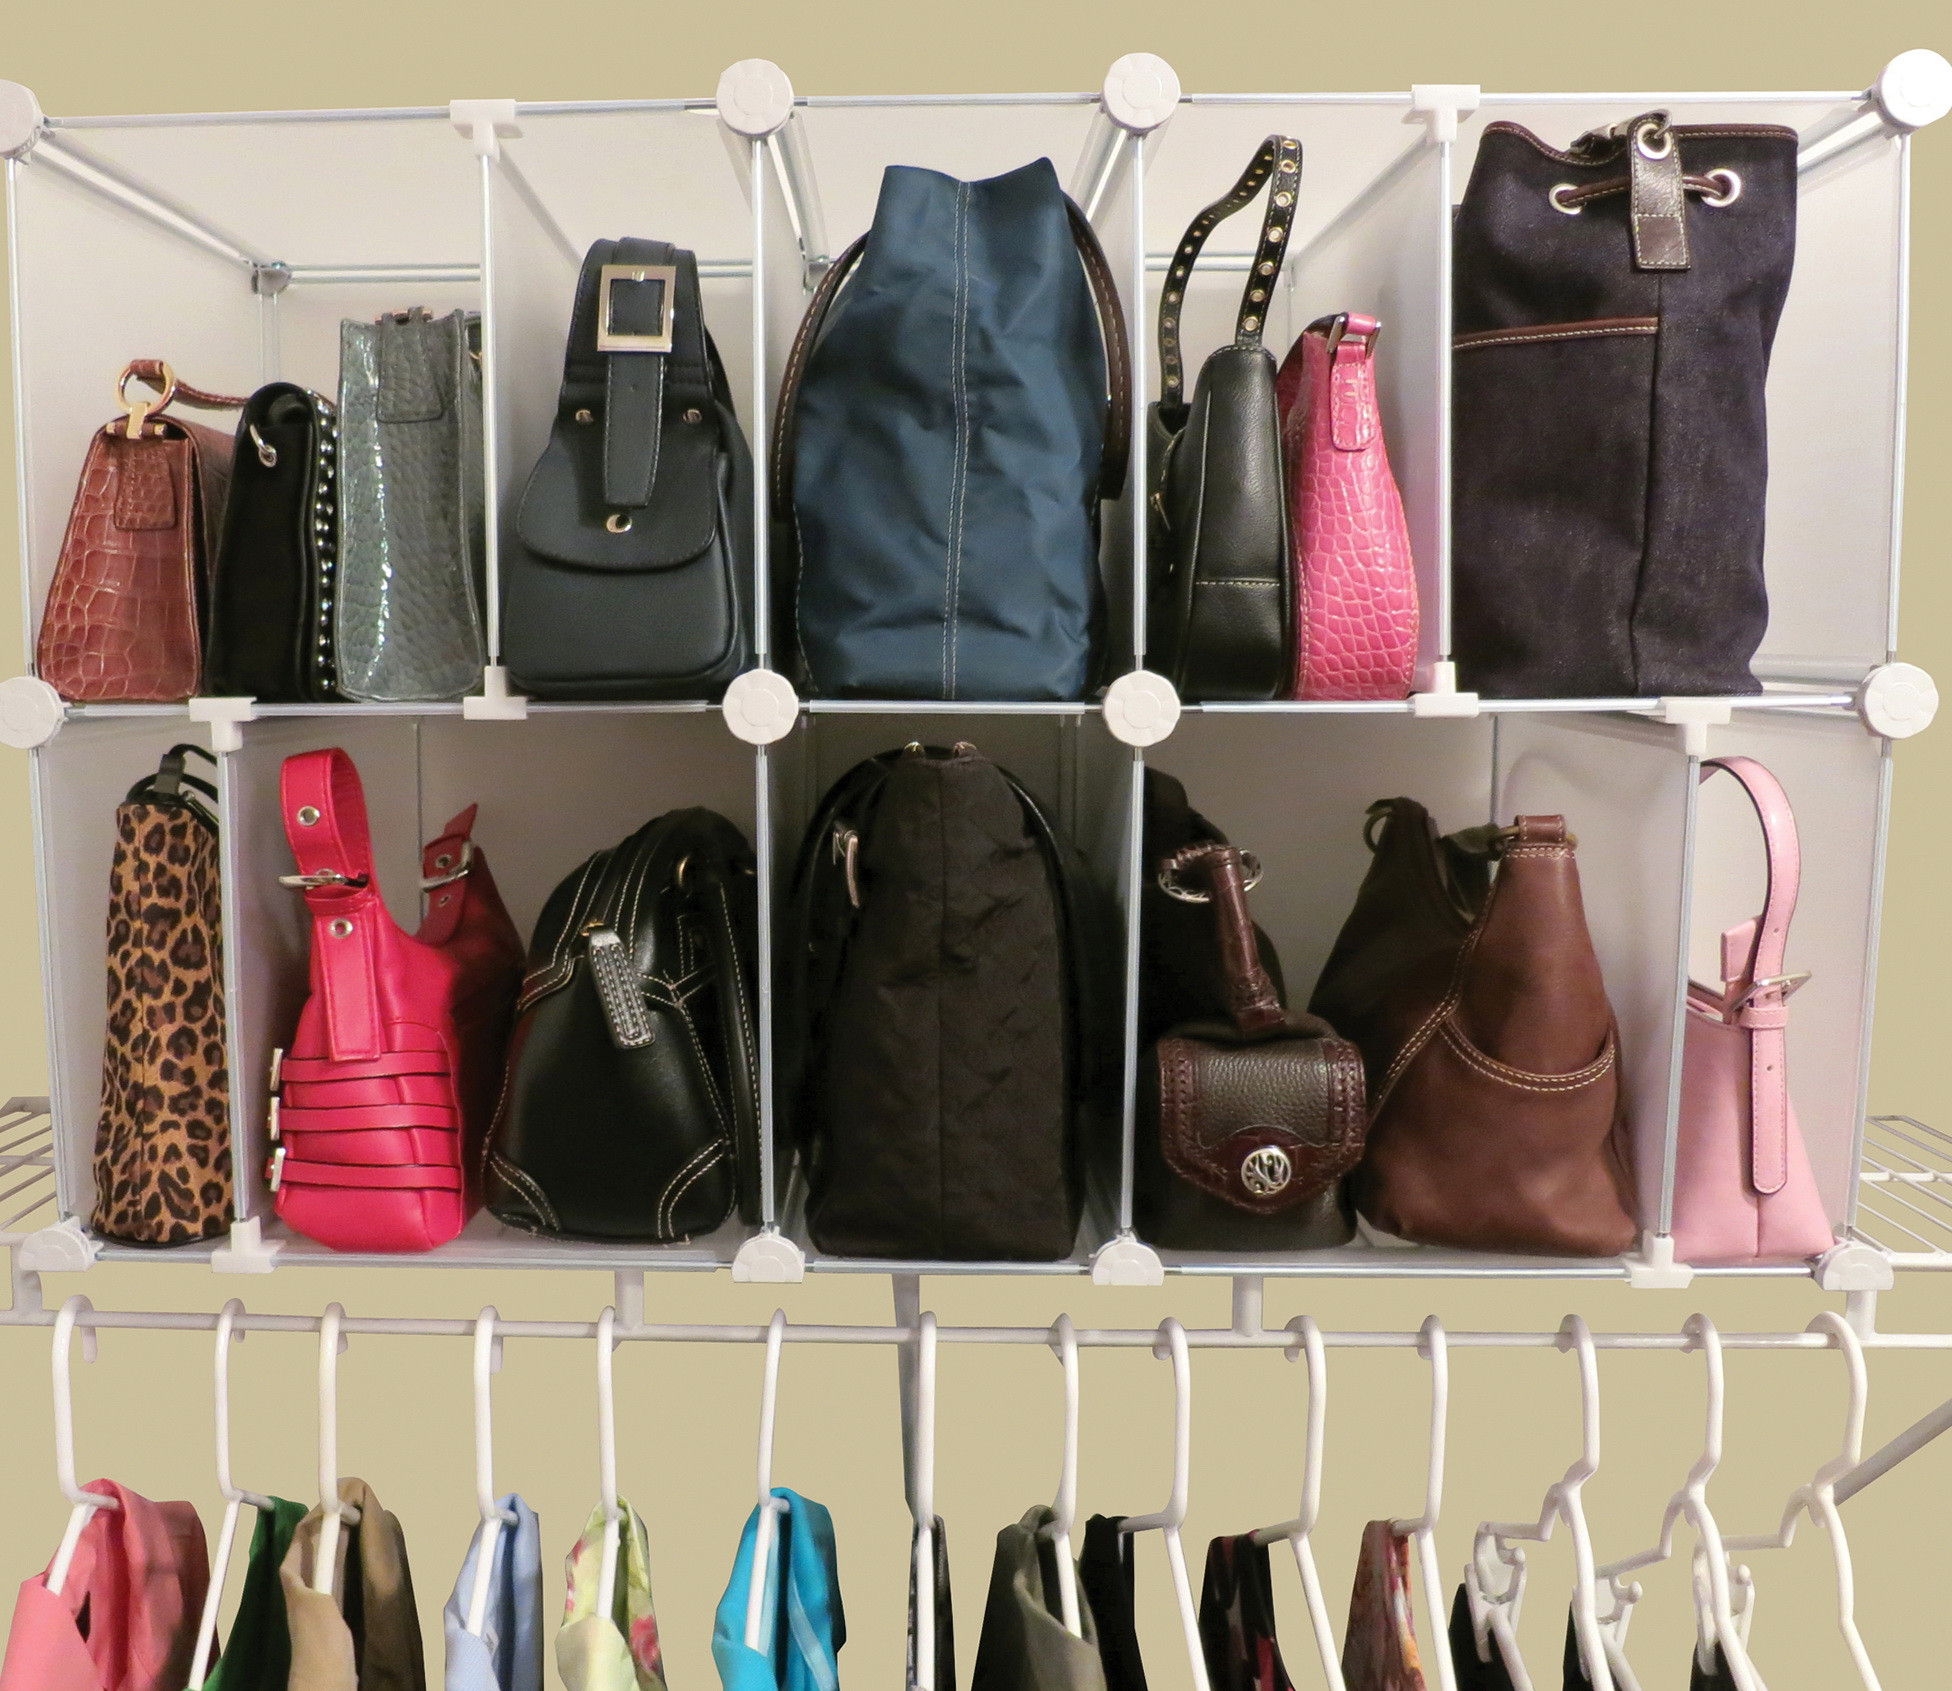 Best ideas about DIY Purse Organizer For Closet
. Save or Pin Diy Purse Organizer Closet Now.